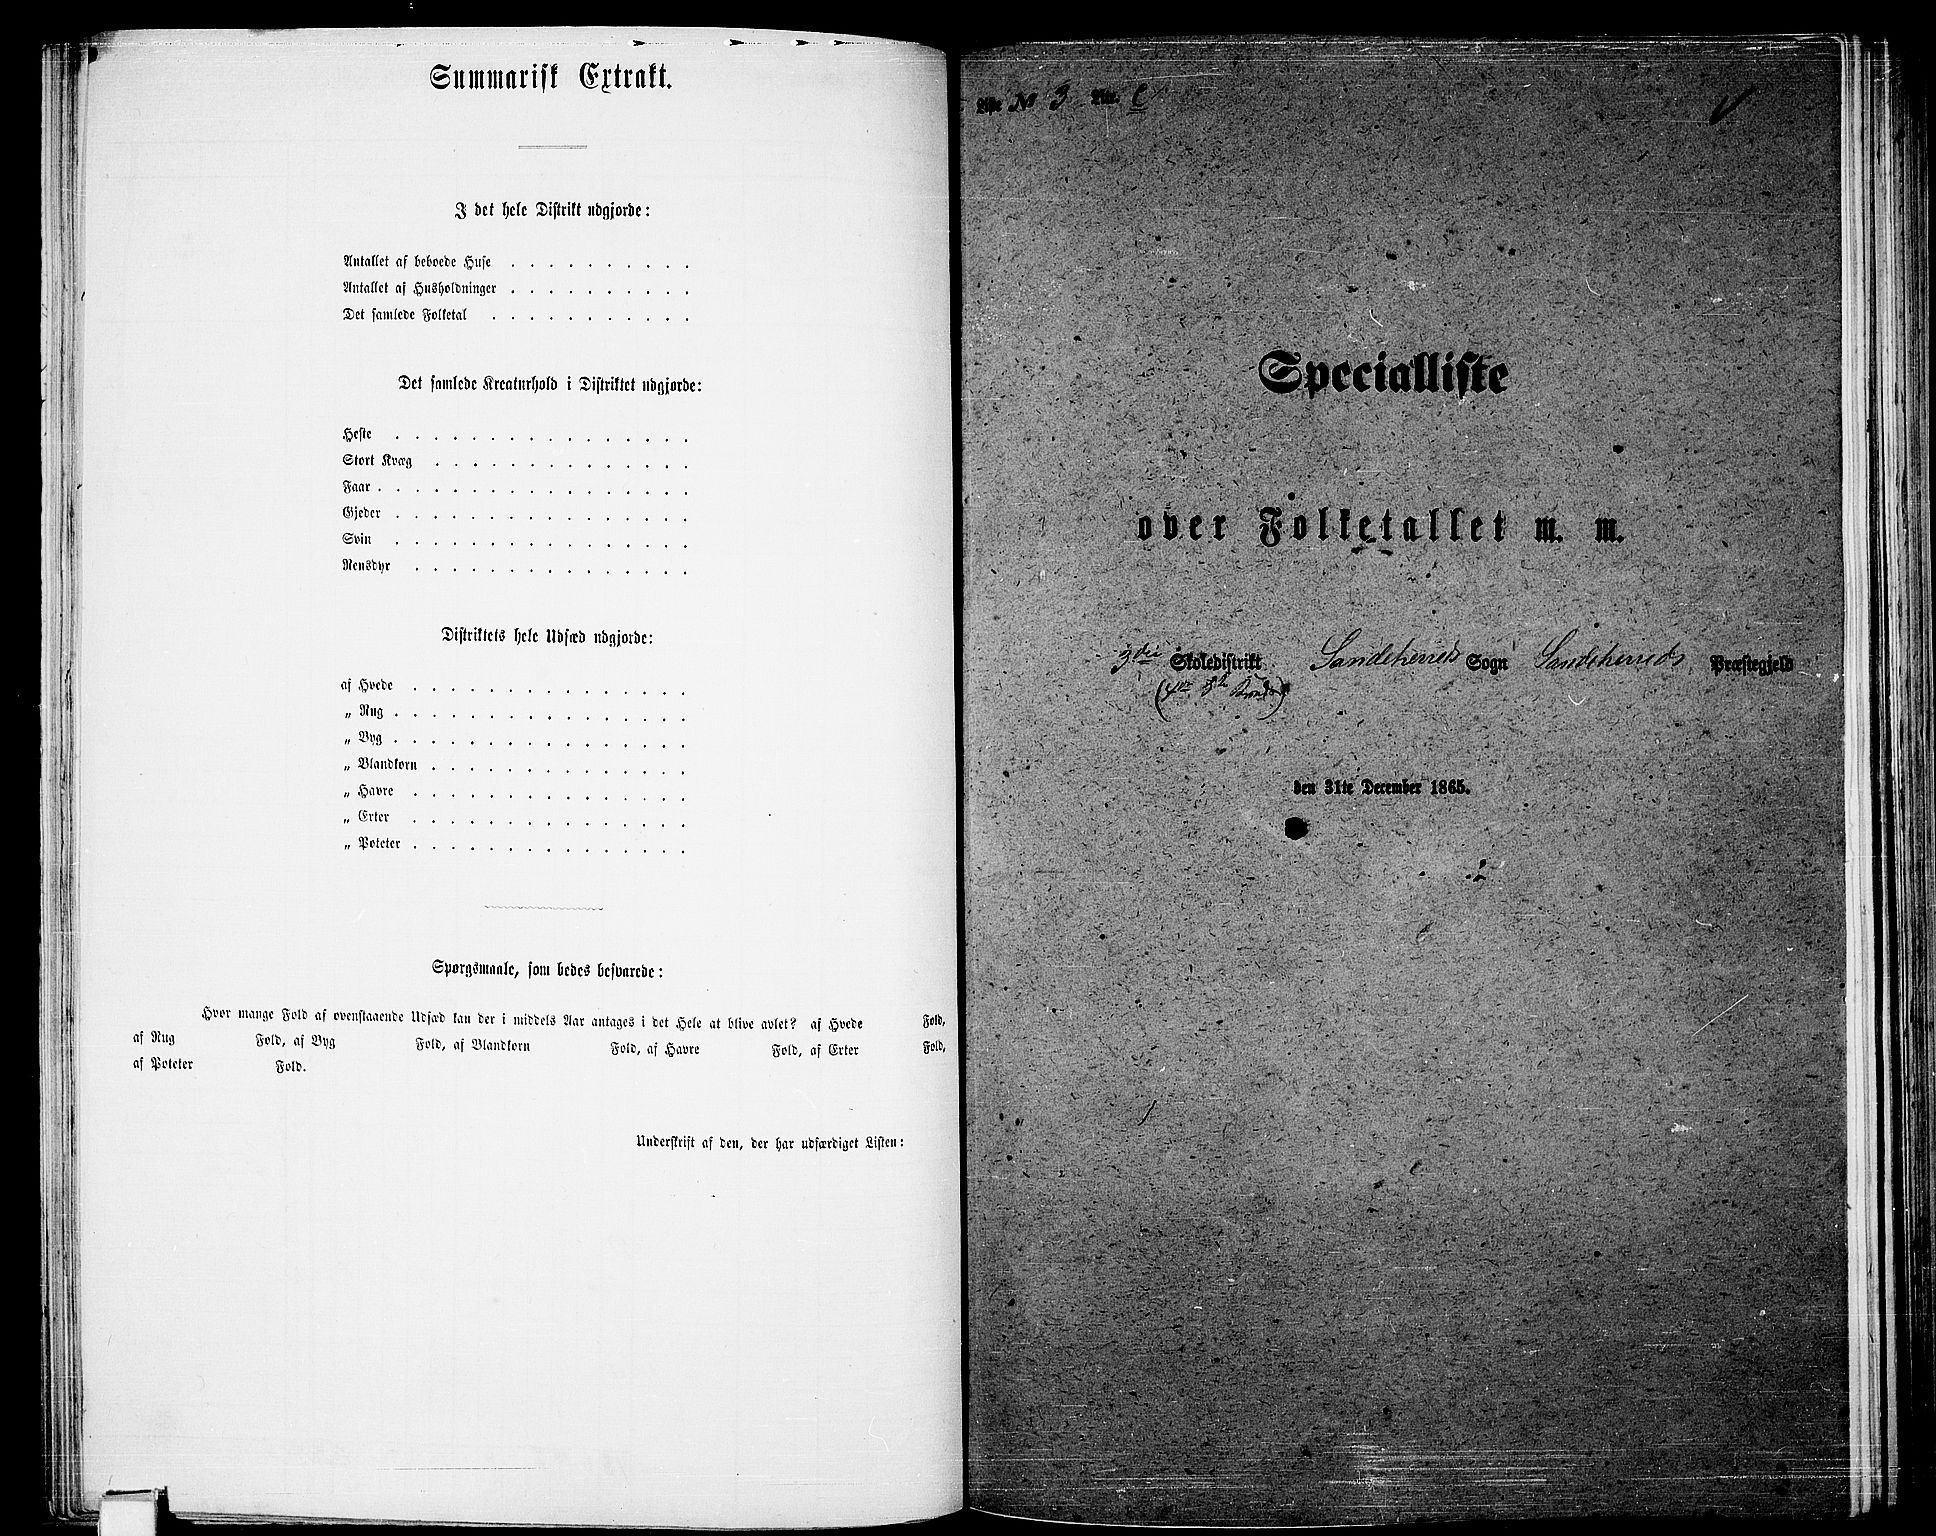 RA, Folketelling 1865 for 0724L Sandeherred prestegjeld, Sandeherred sokn, 1865, s. 100